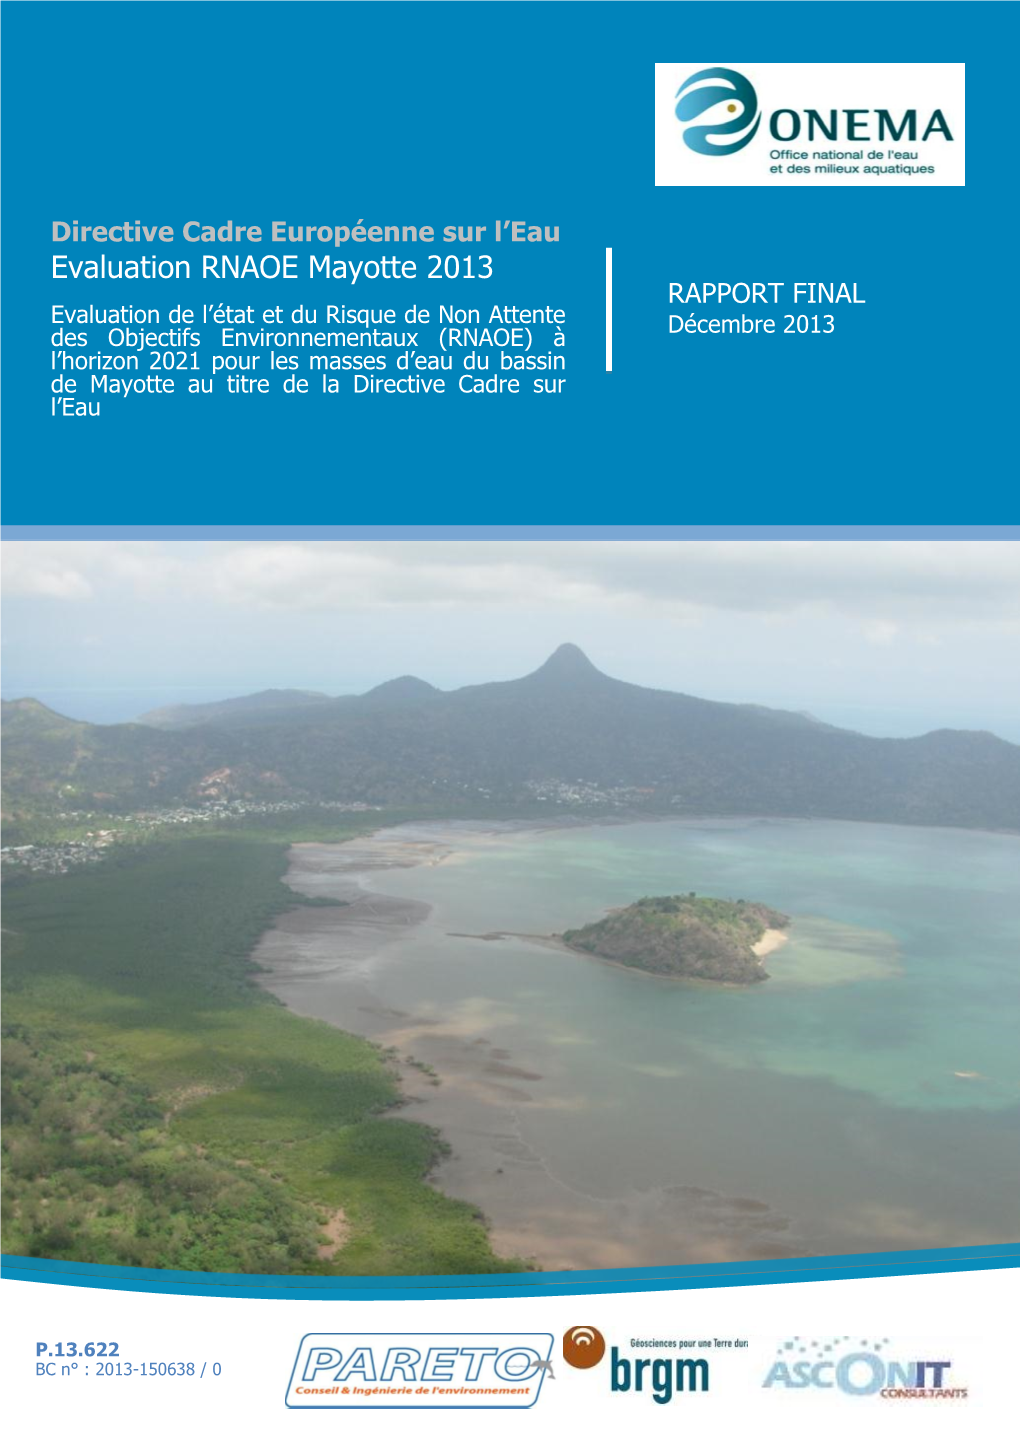 Evaluation RNAOE Mayotte 2013